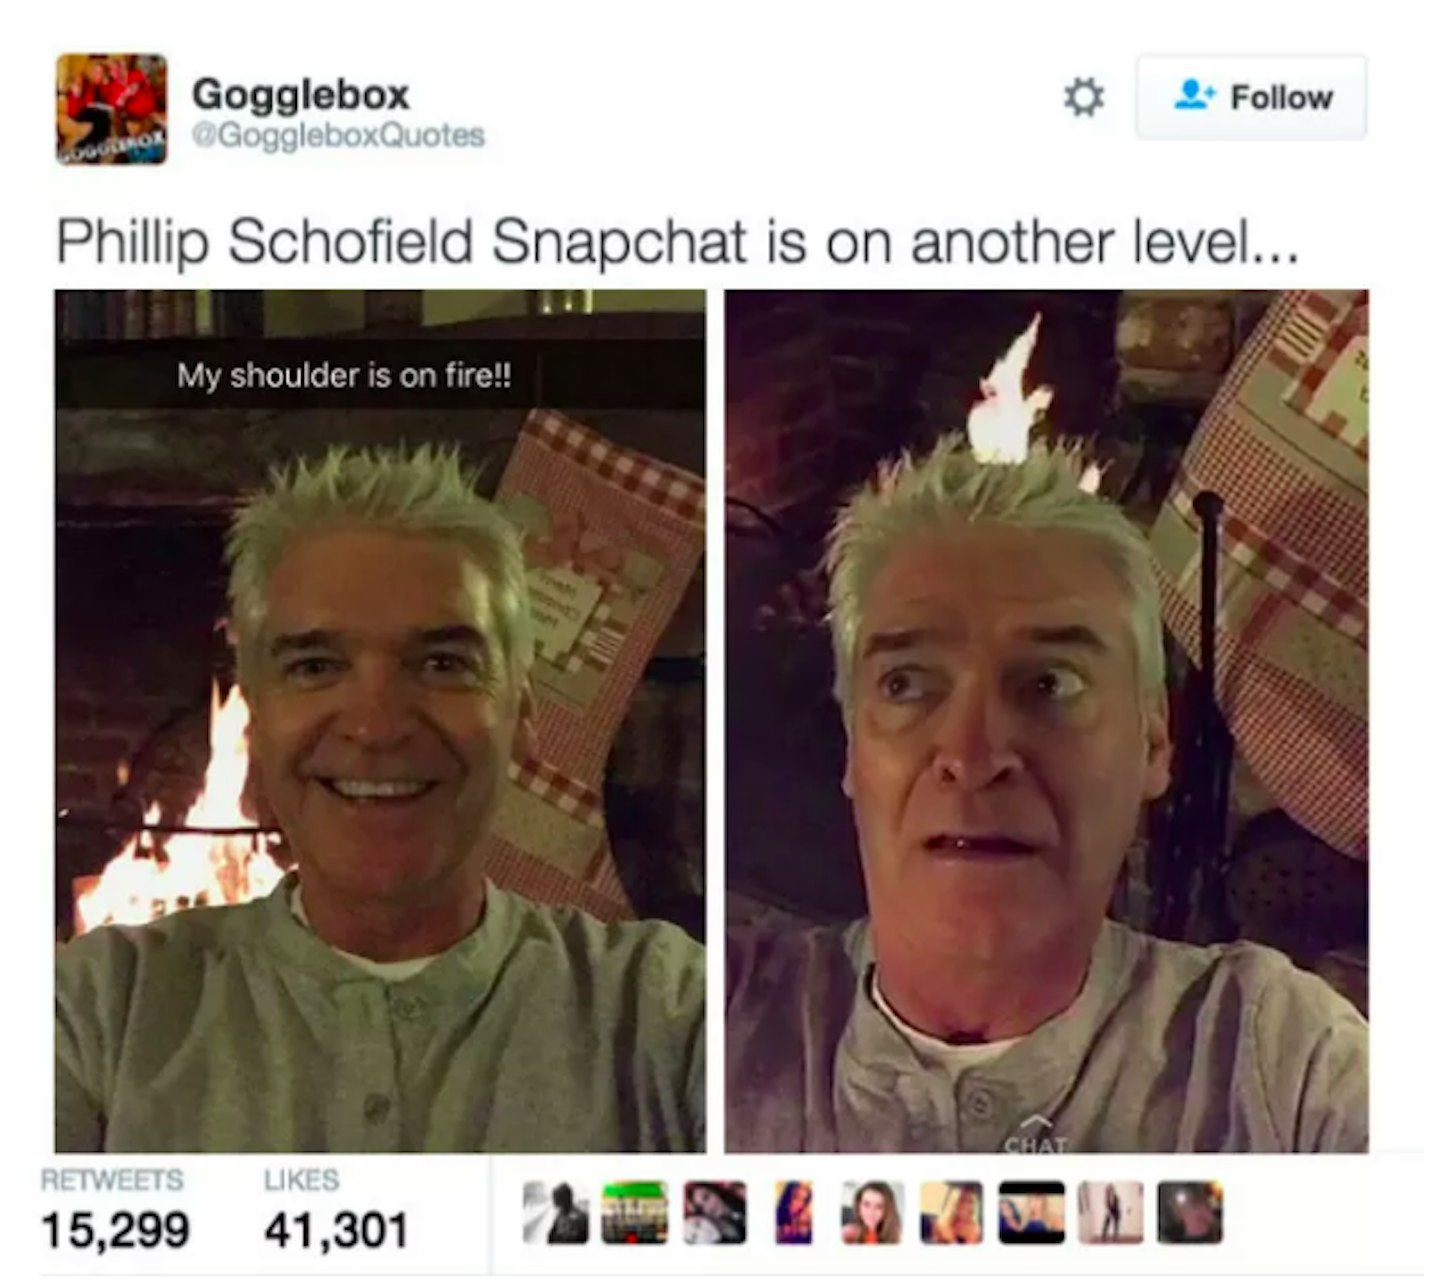 Phillip Schofield snapchat